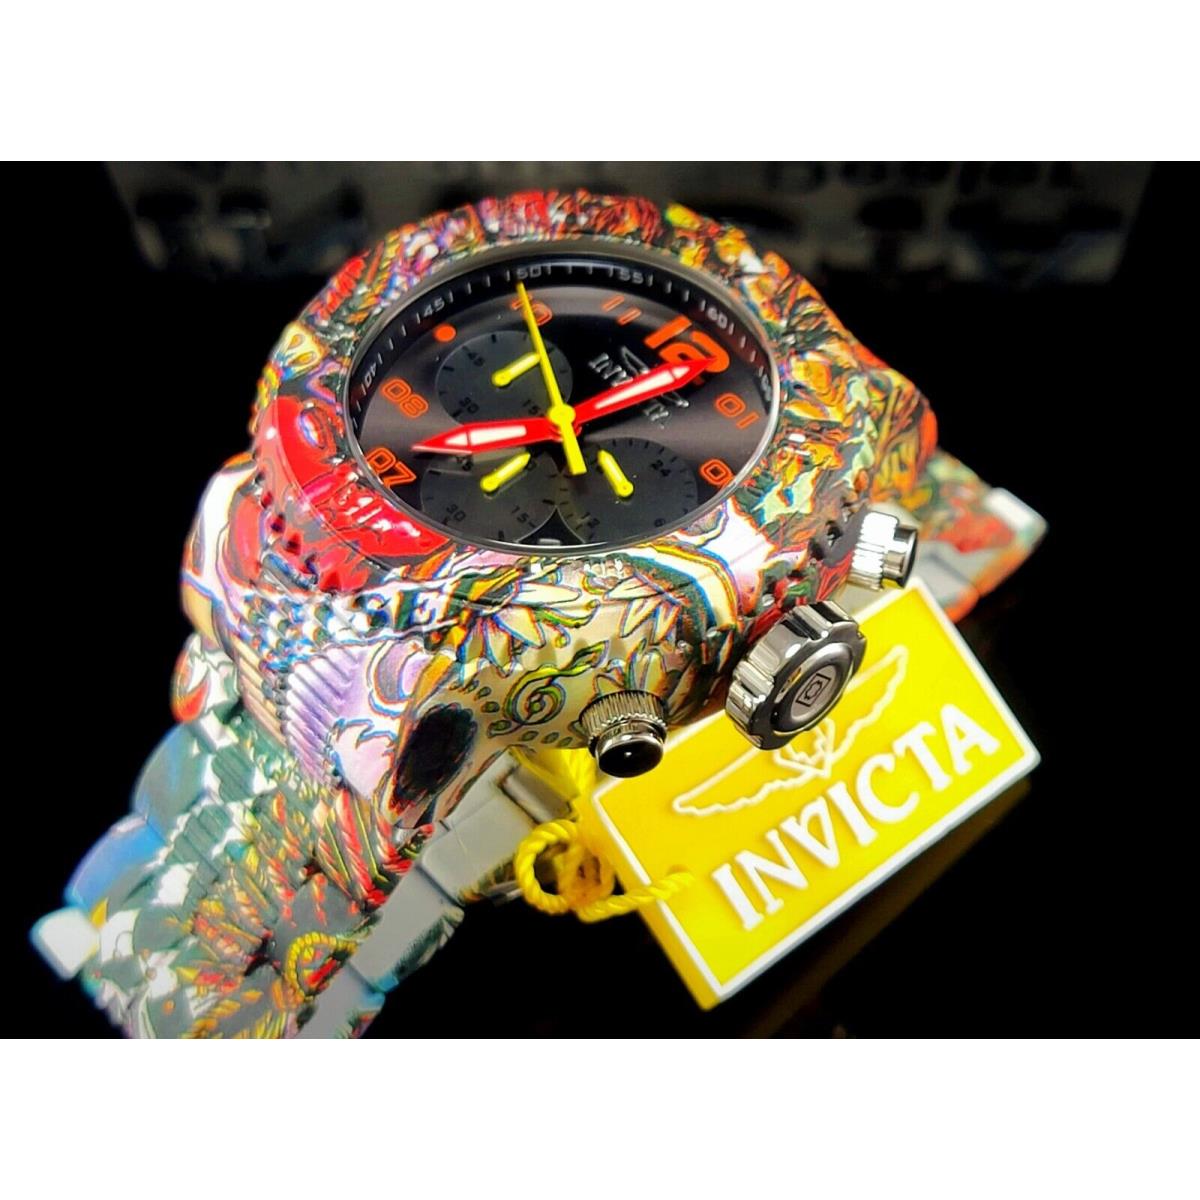 Invicta watch Graffiti Pro Diver - Black Dial, Aqua Plated Band